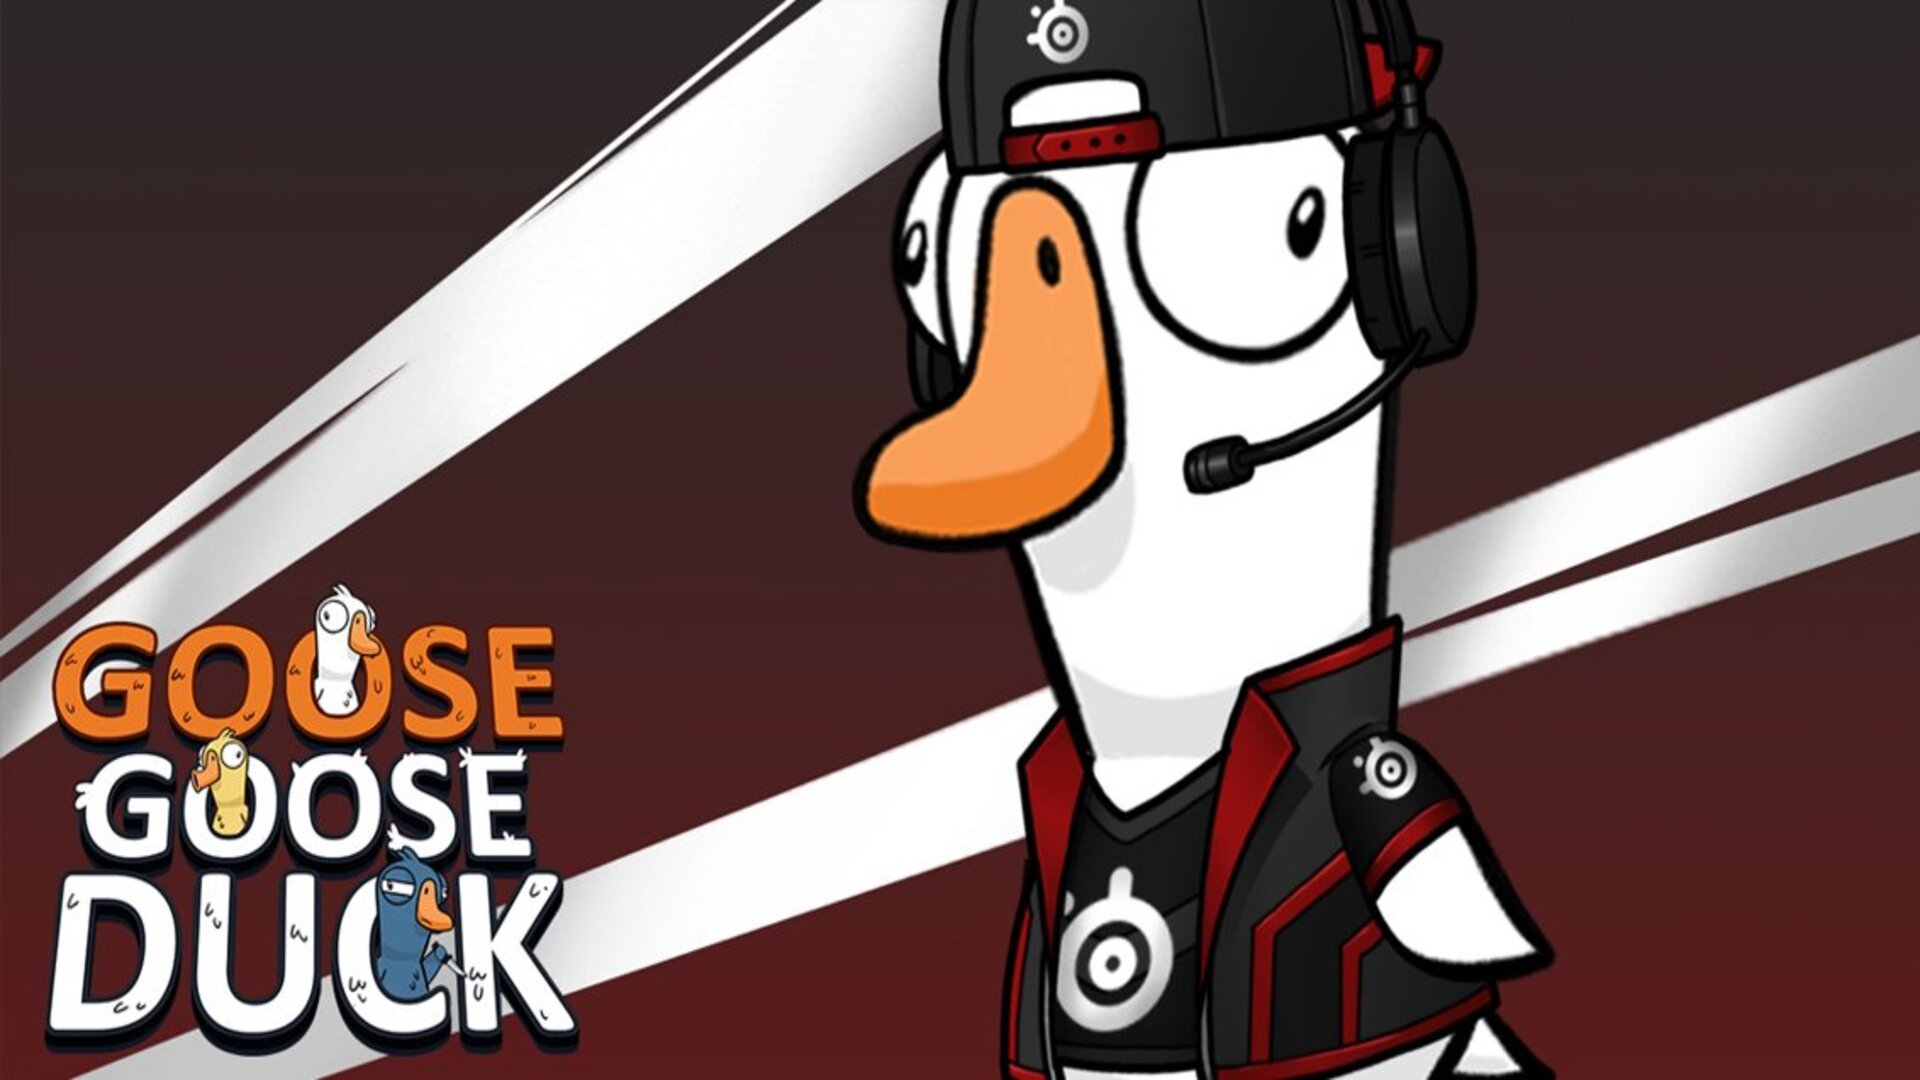 Goose Goose Duck - Steelseries Outfit Pack Digital Download CD Key [$ 3.79]